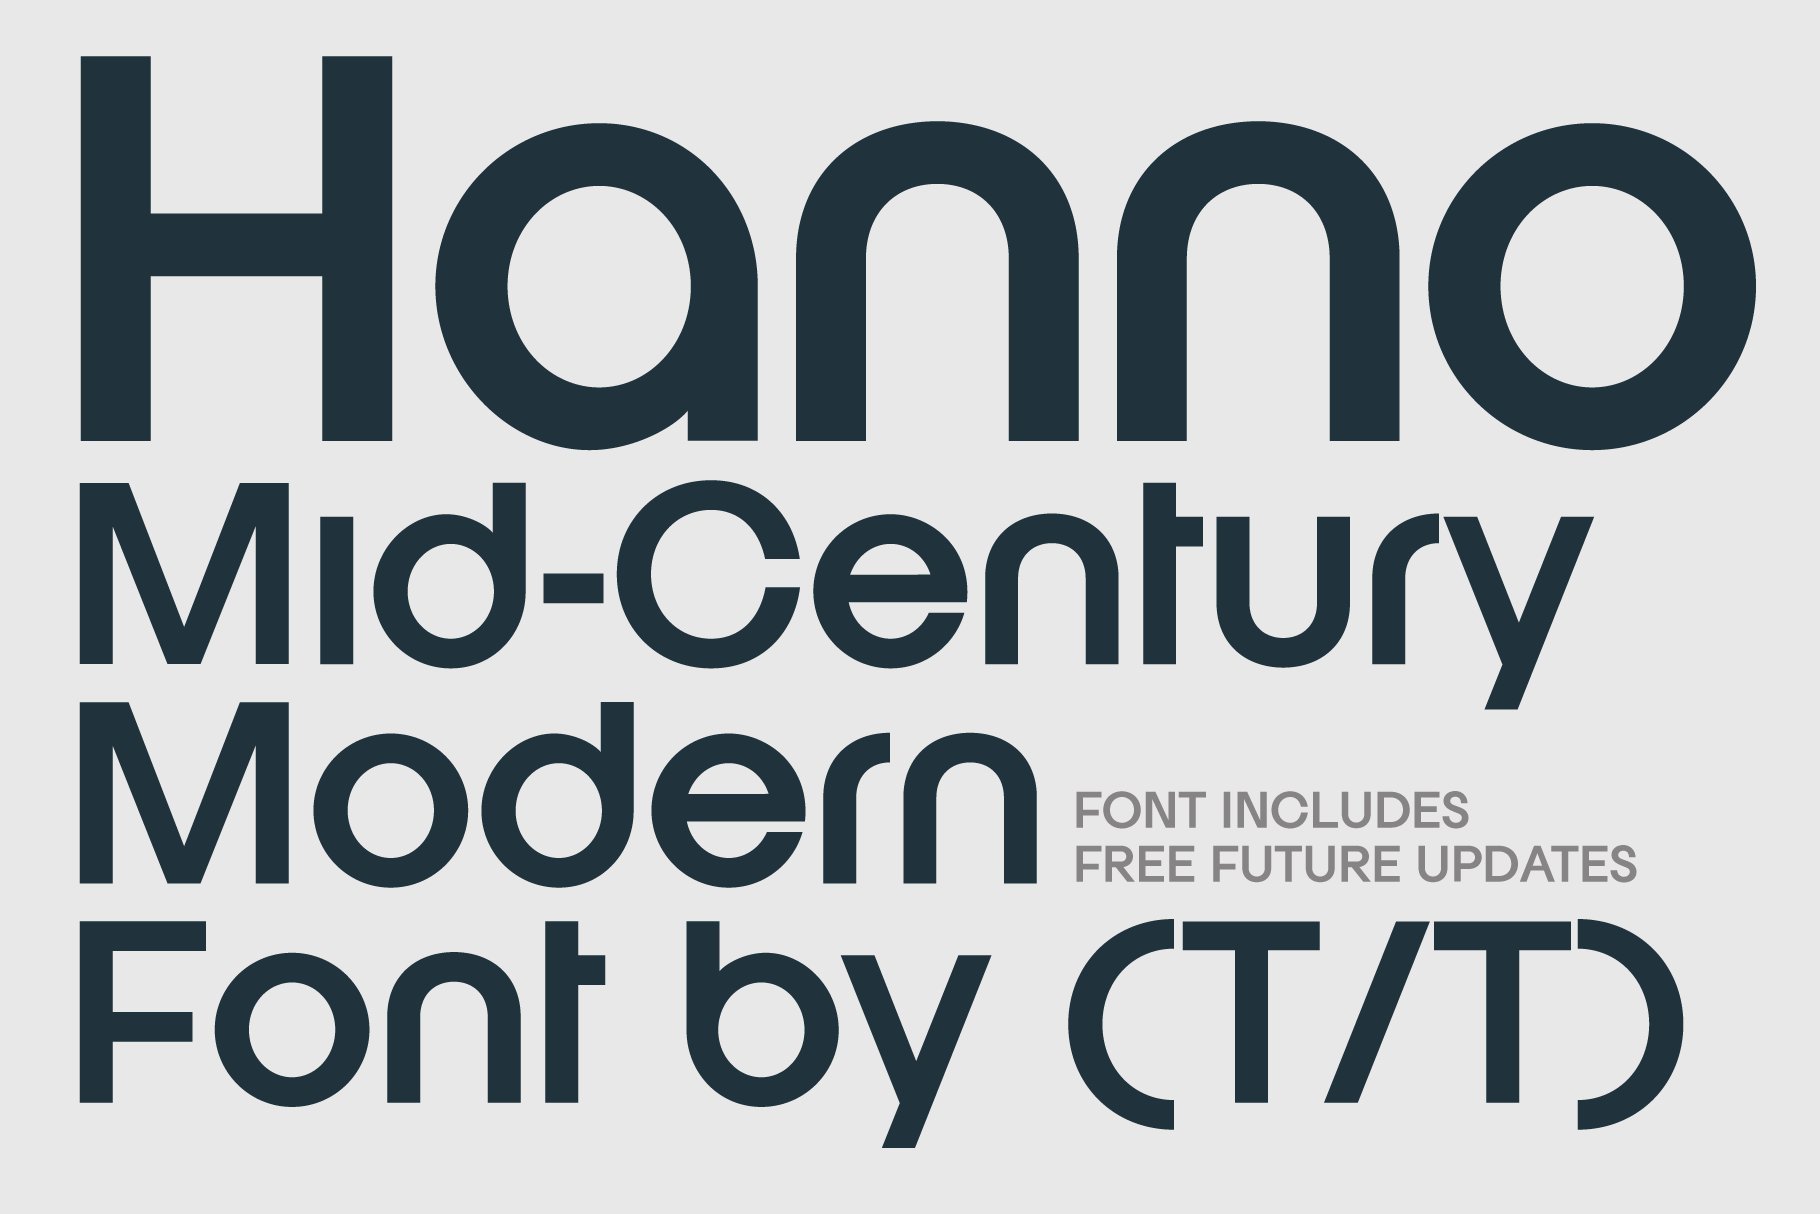 mid century modern font 582